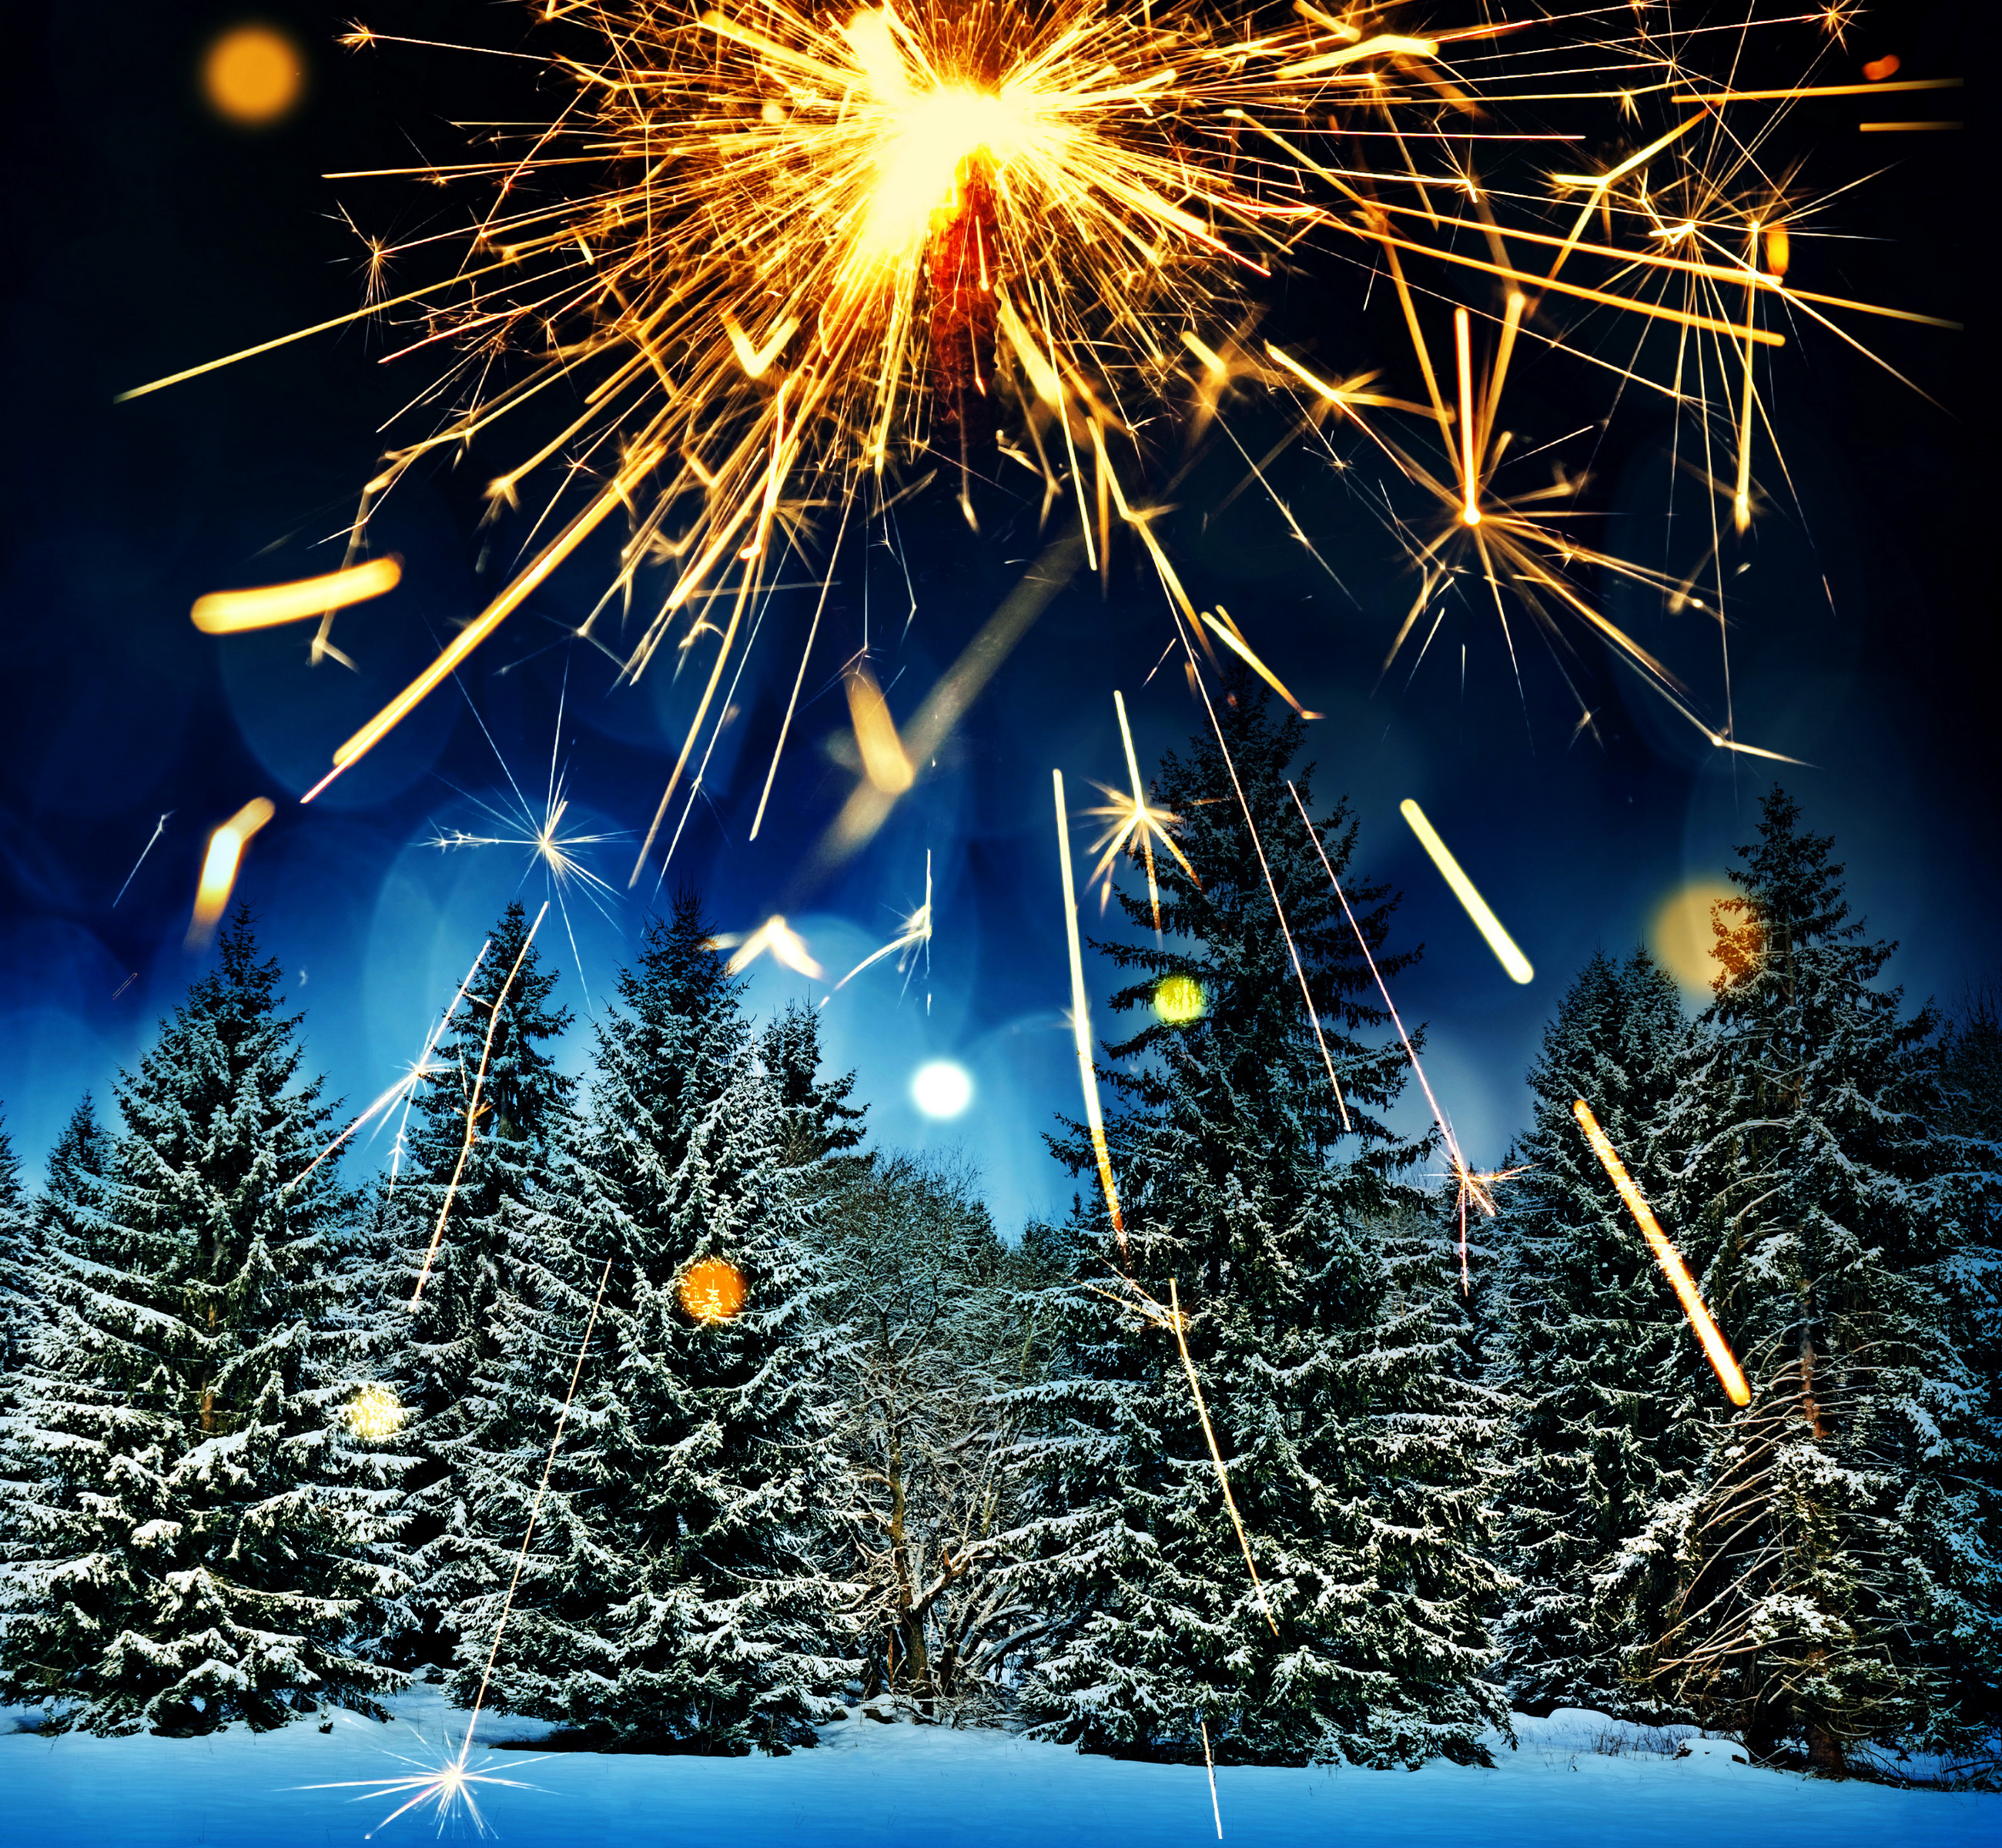 Winter_Forests_Fireworks_464494.jpg